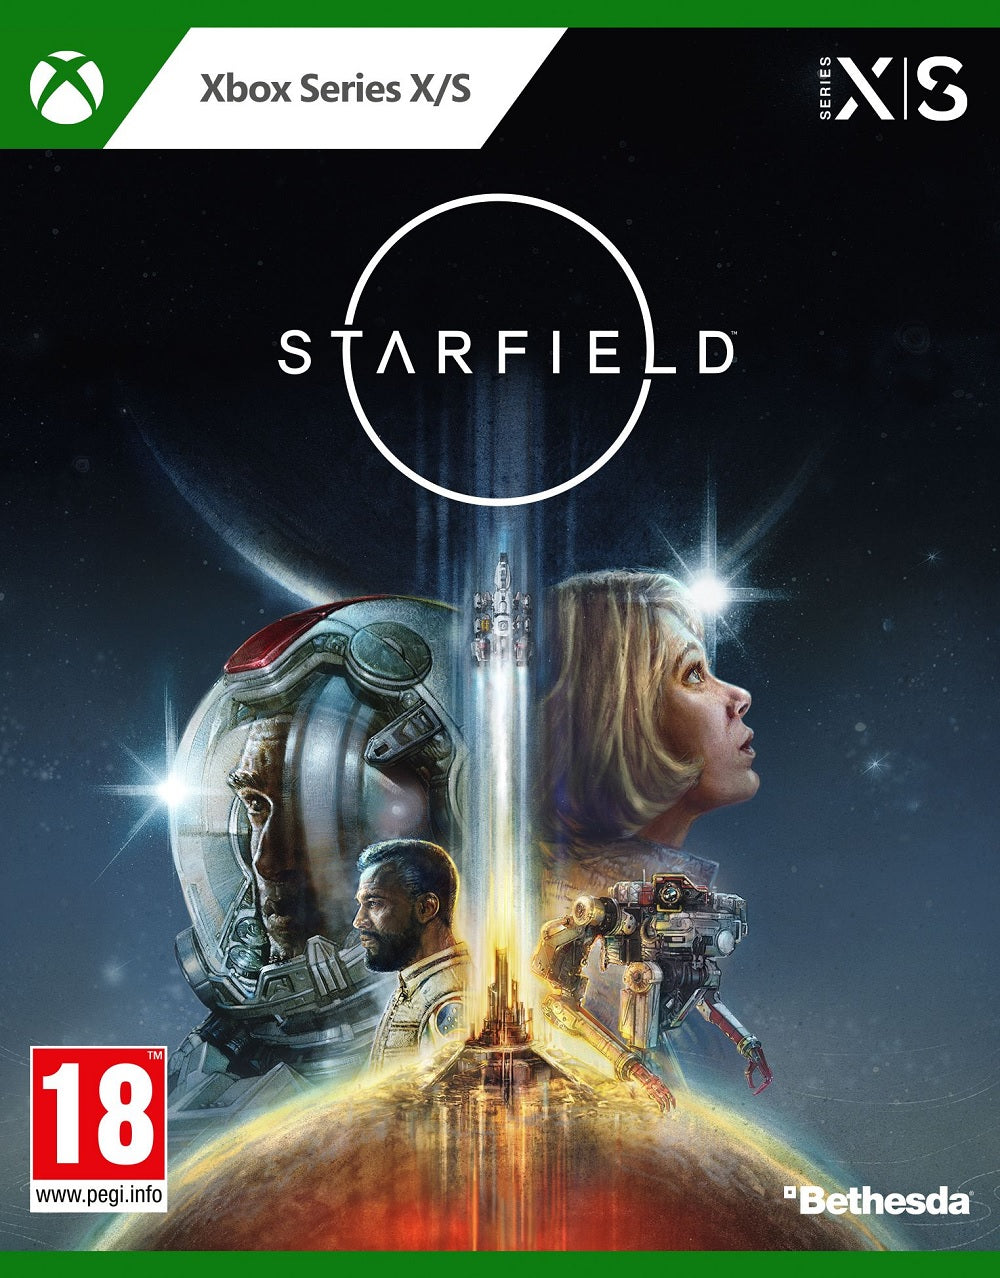 Xbox Series X Starfield - Data di uscita: 06-09-23 Plaion